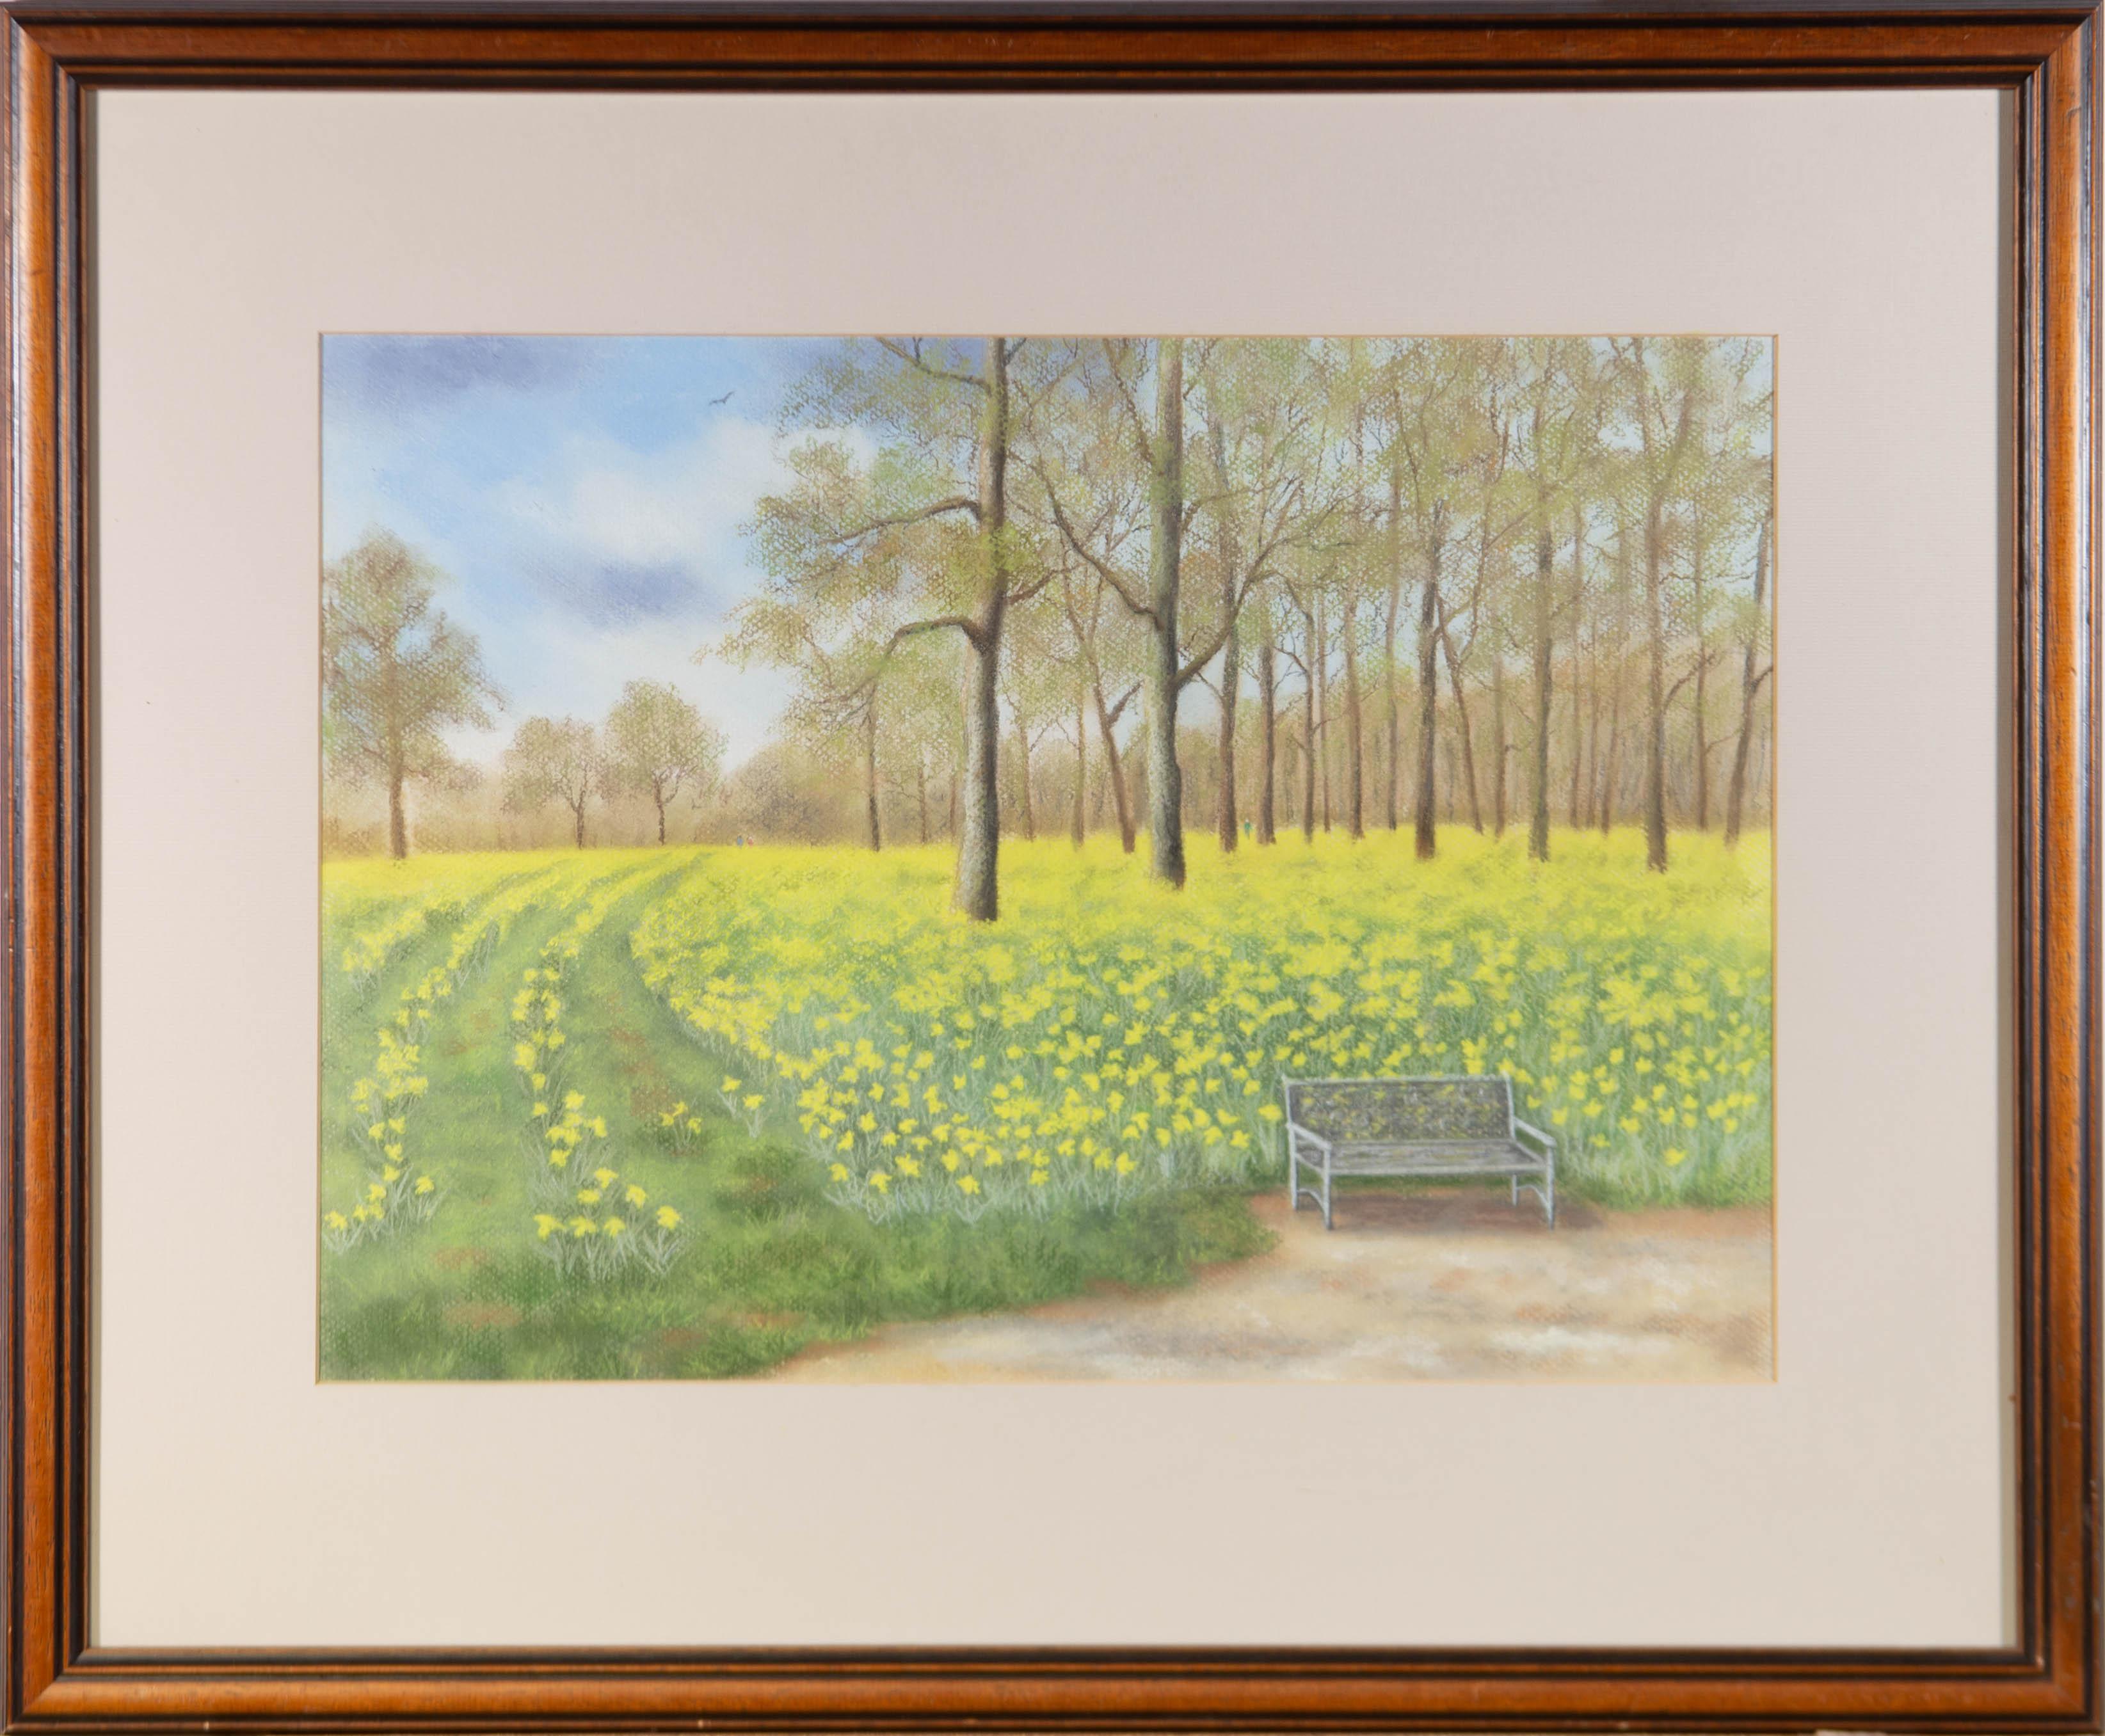 Unknown Landscape Art - 20th Century Pastel - The Park Bench